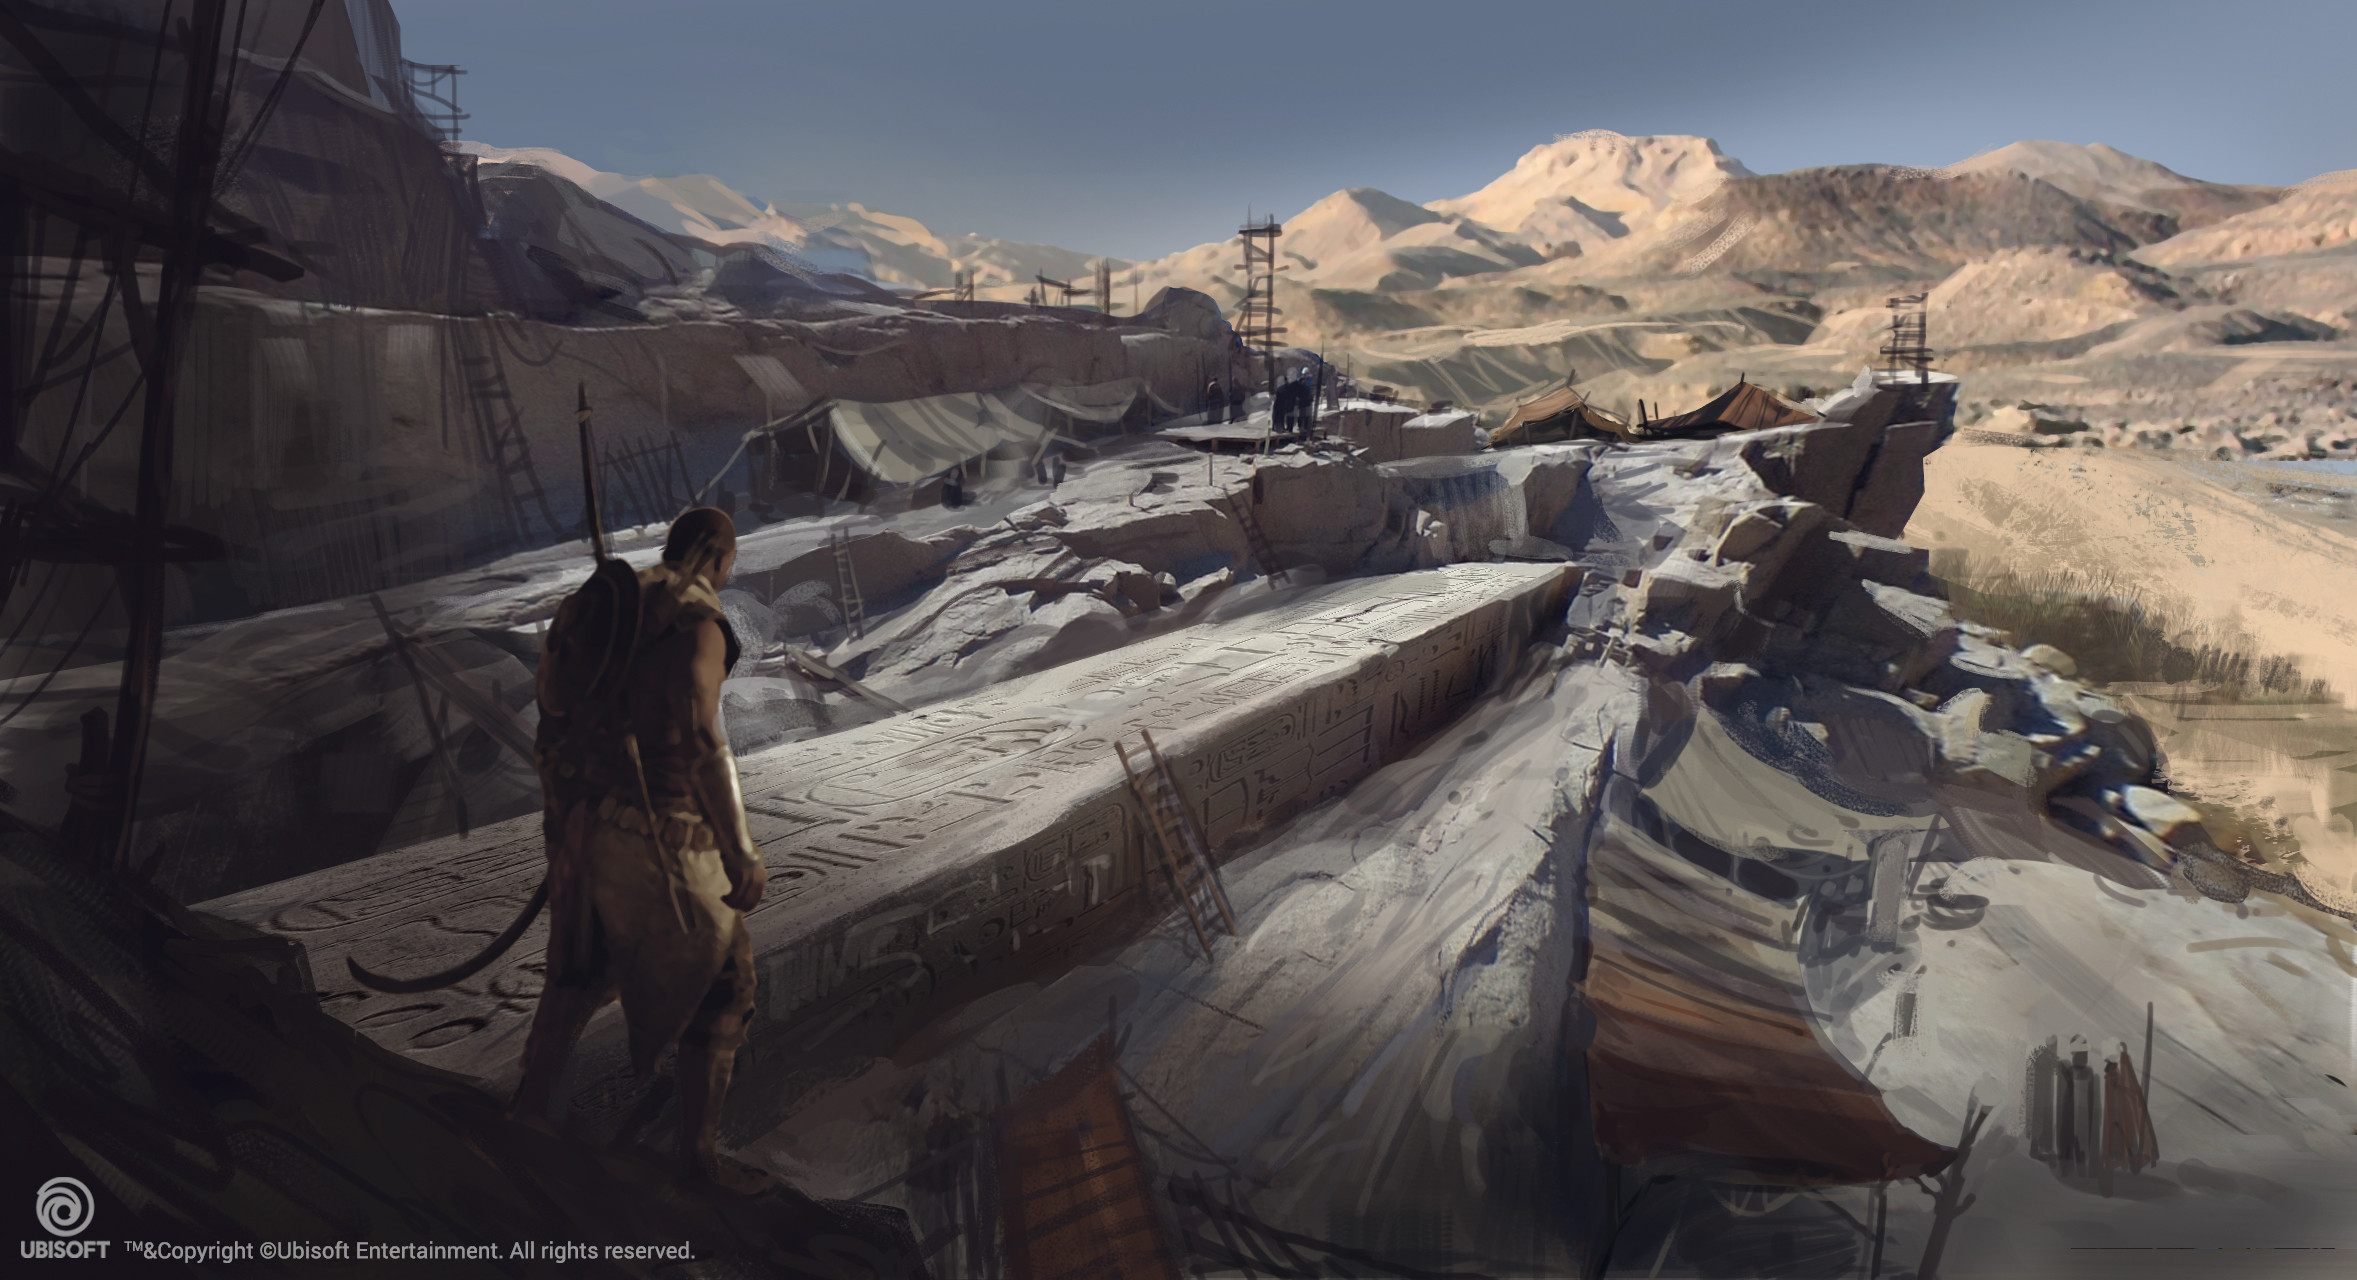 ArtStation - Assassin's Creed Origins / The Curse of the Pharaohs DLC,  Sabin Boykinov